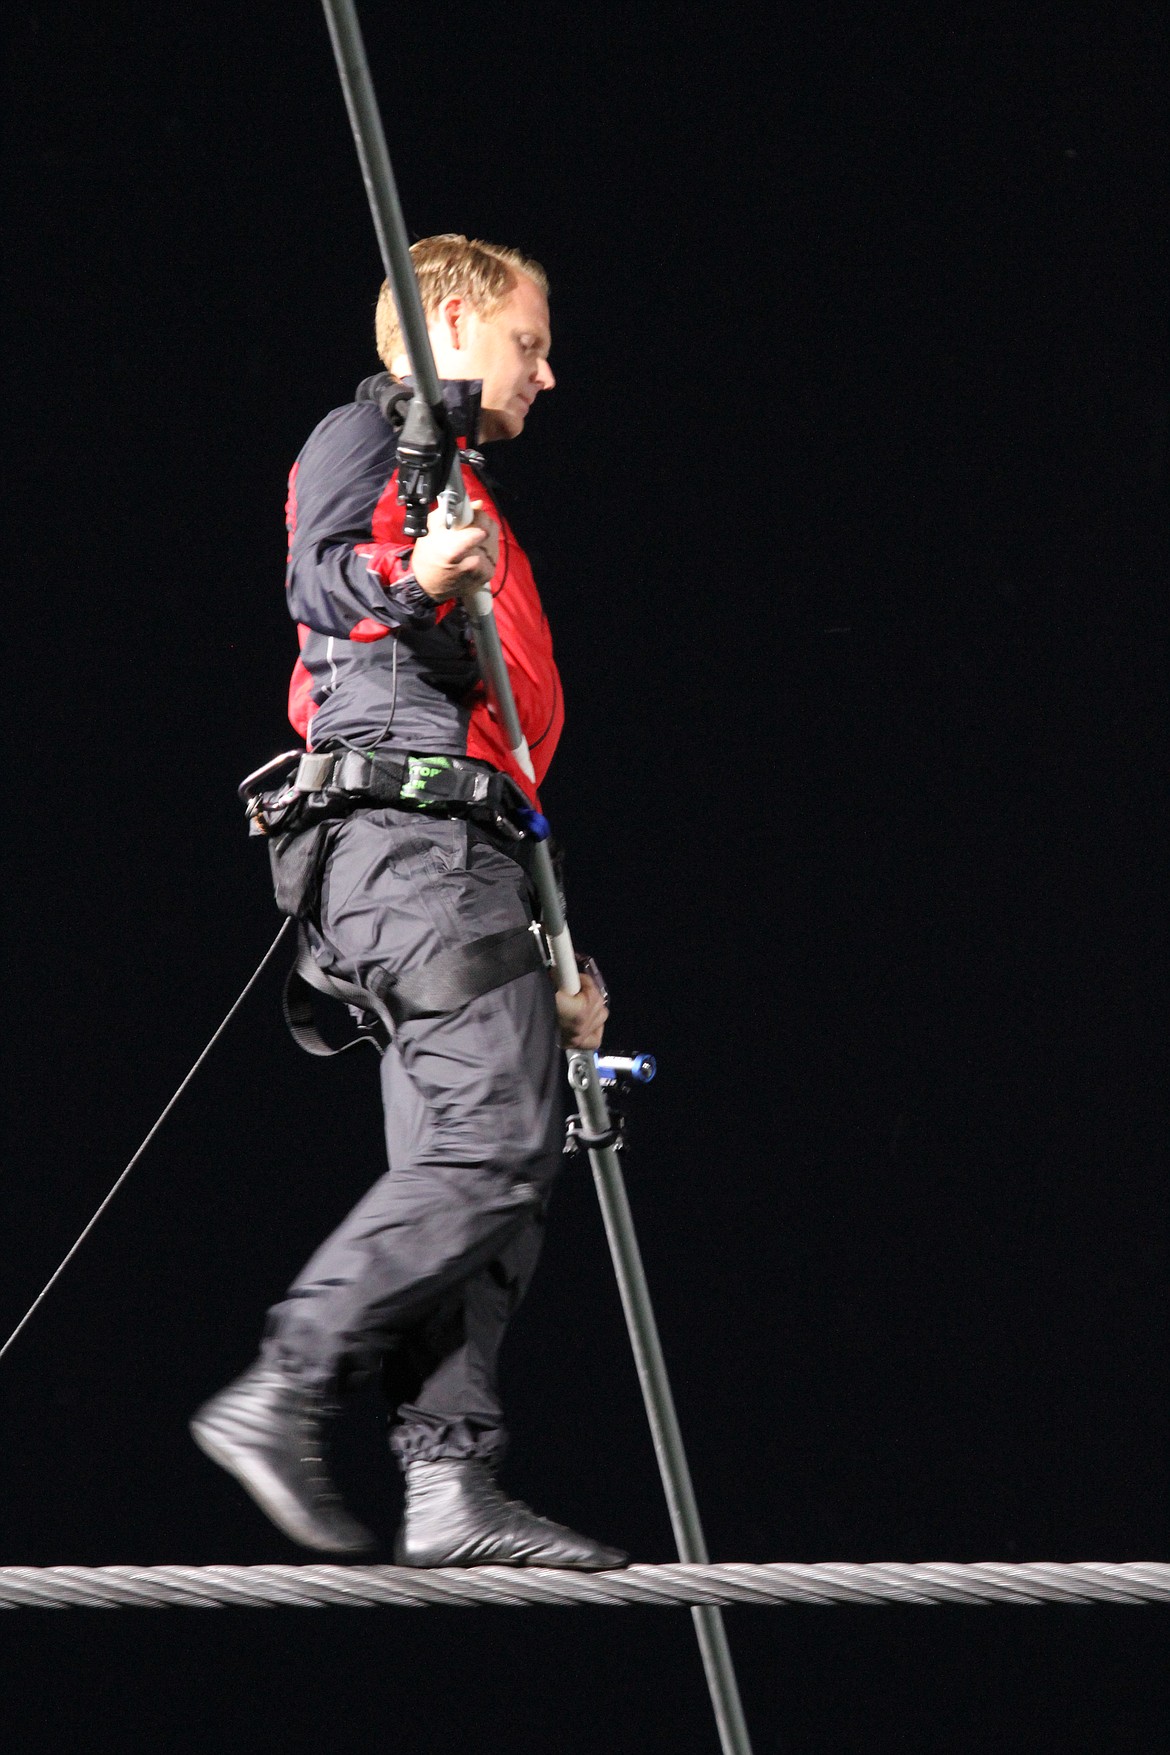 Nik Wallenda taking first step on walking the tightrope across Niagara Falls, June 15, 2012.